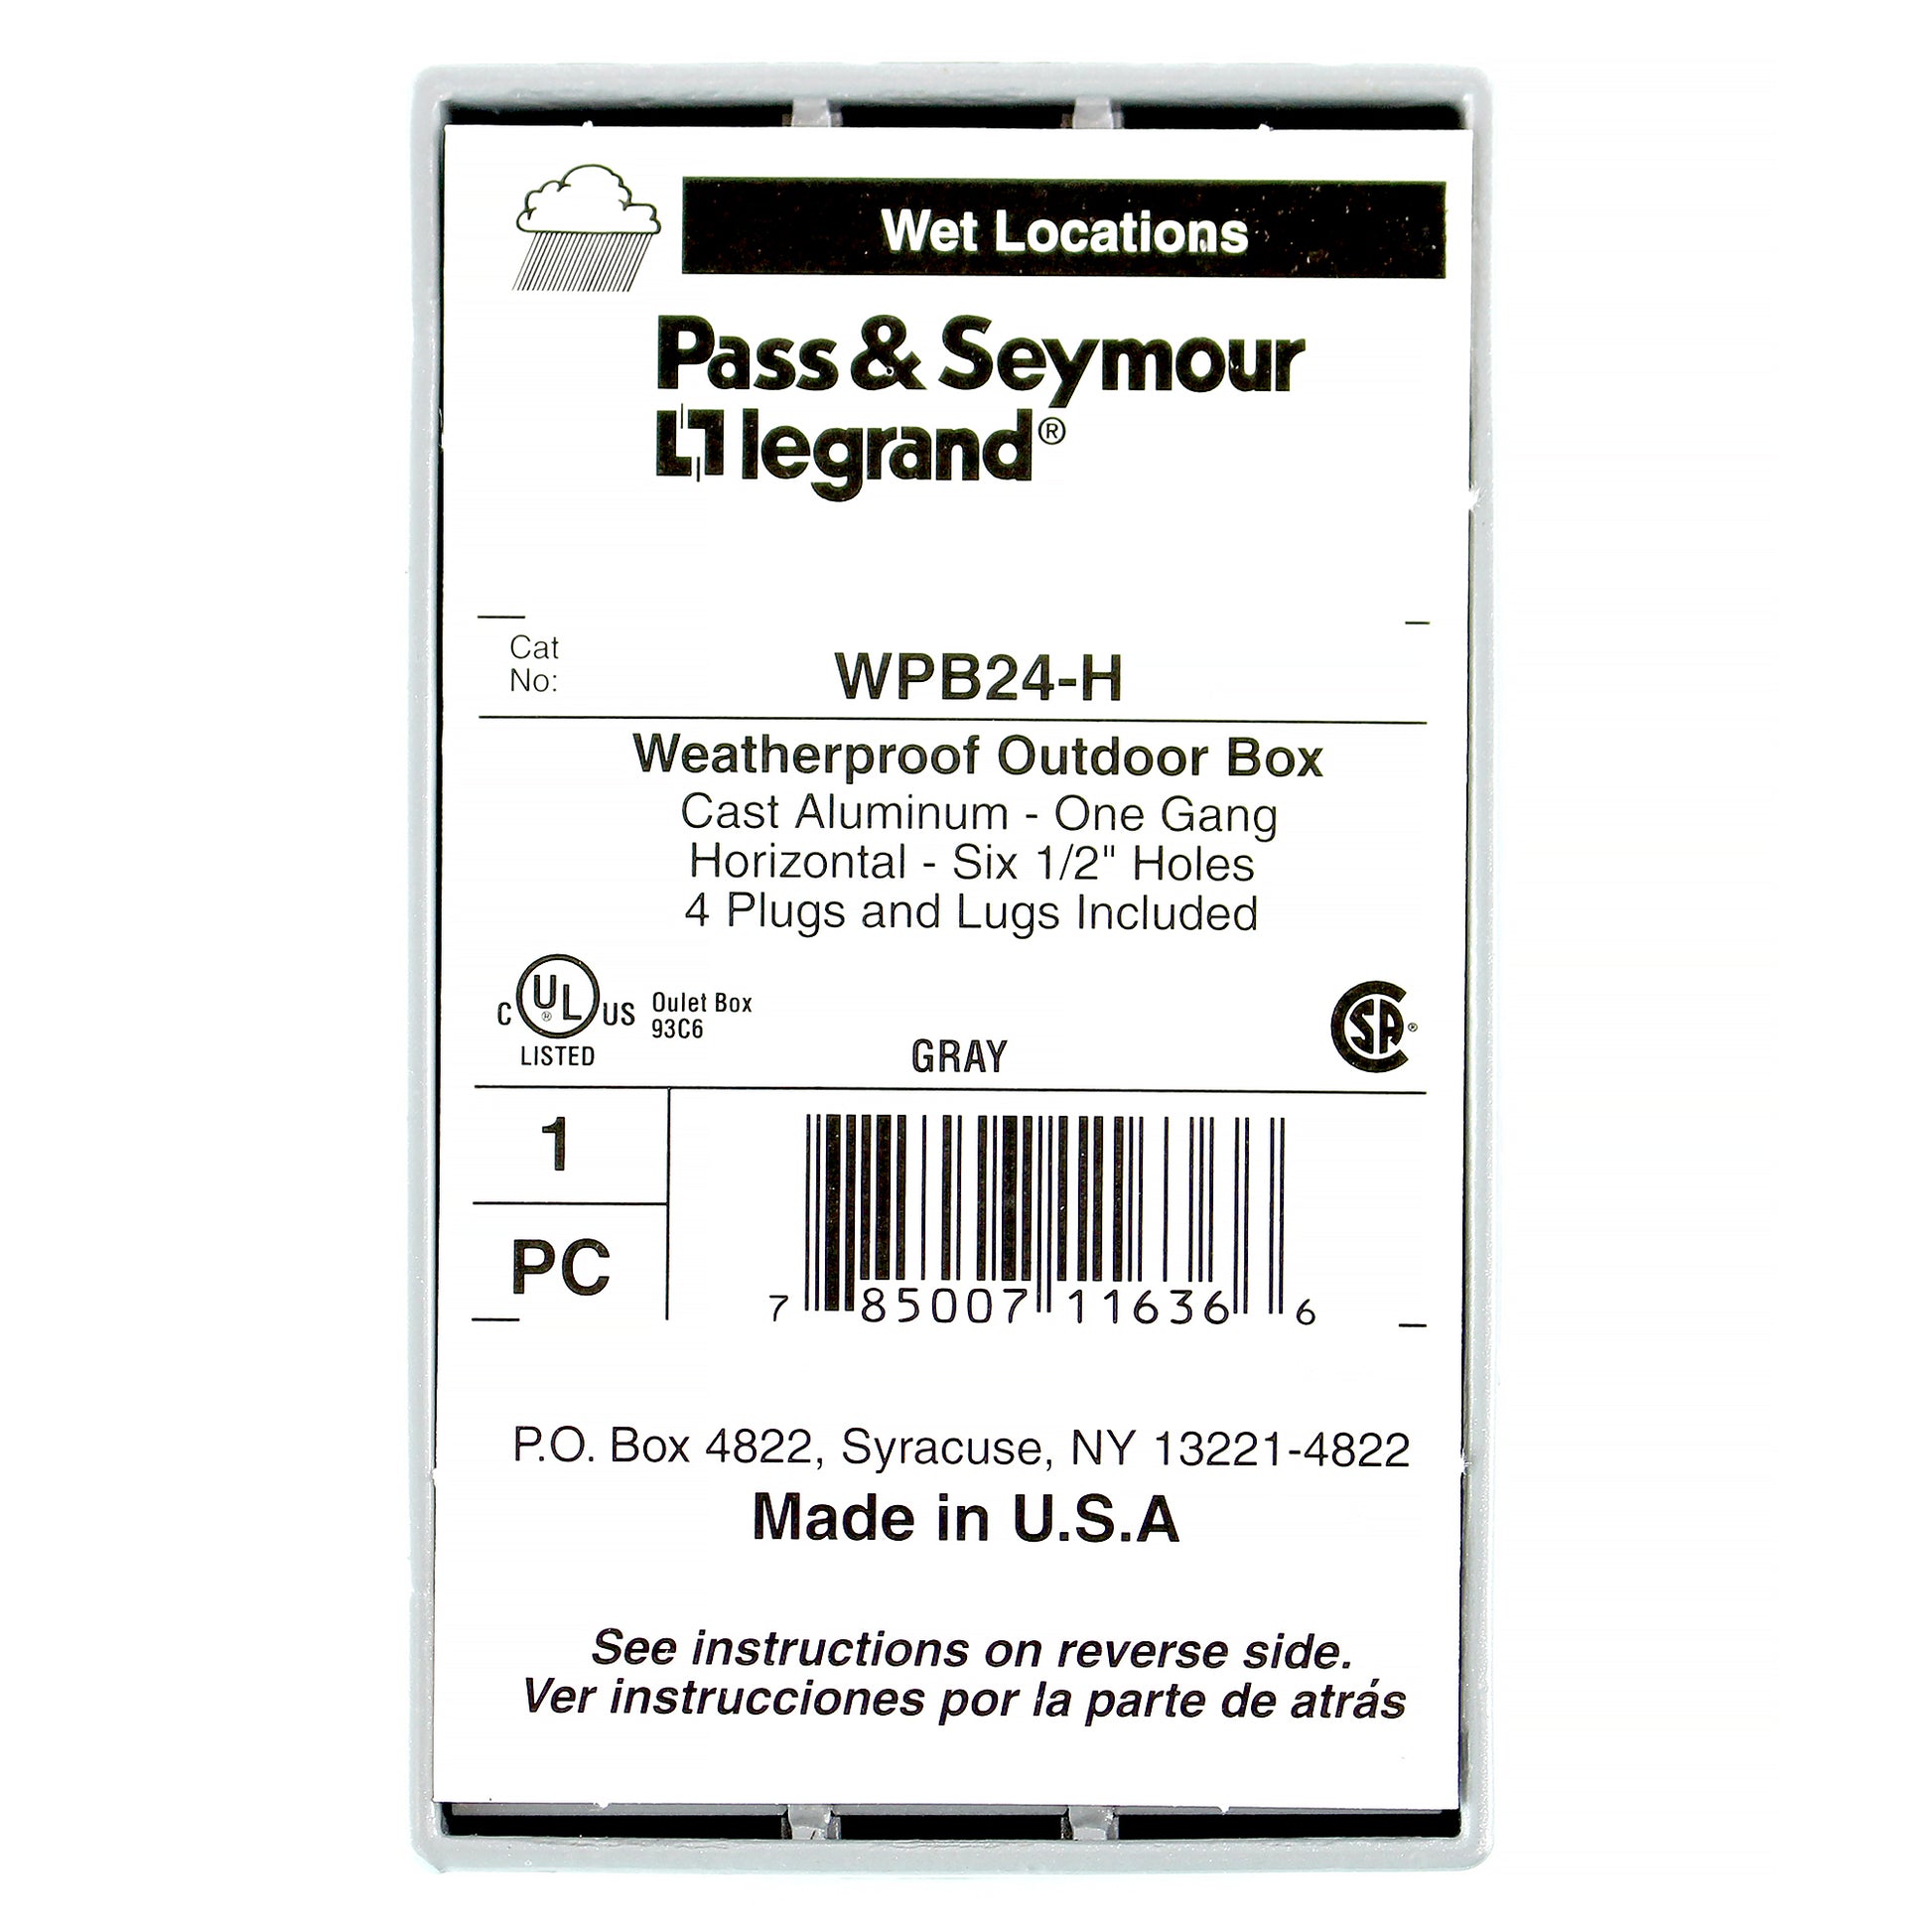 Pass & Seymour Legrand WPB24-H